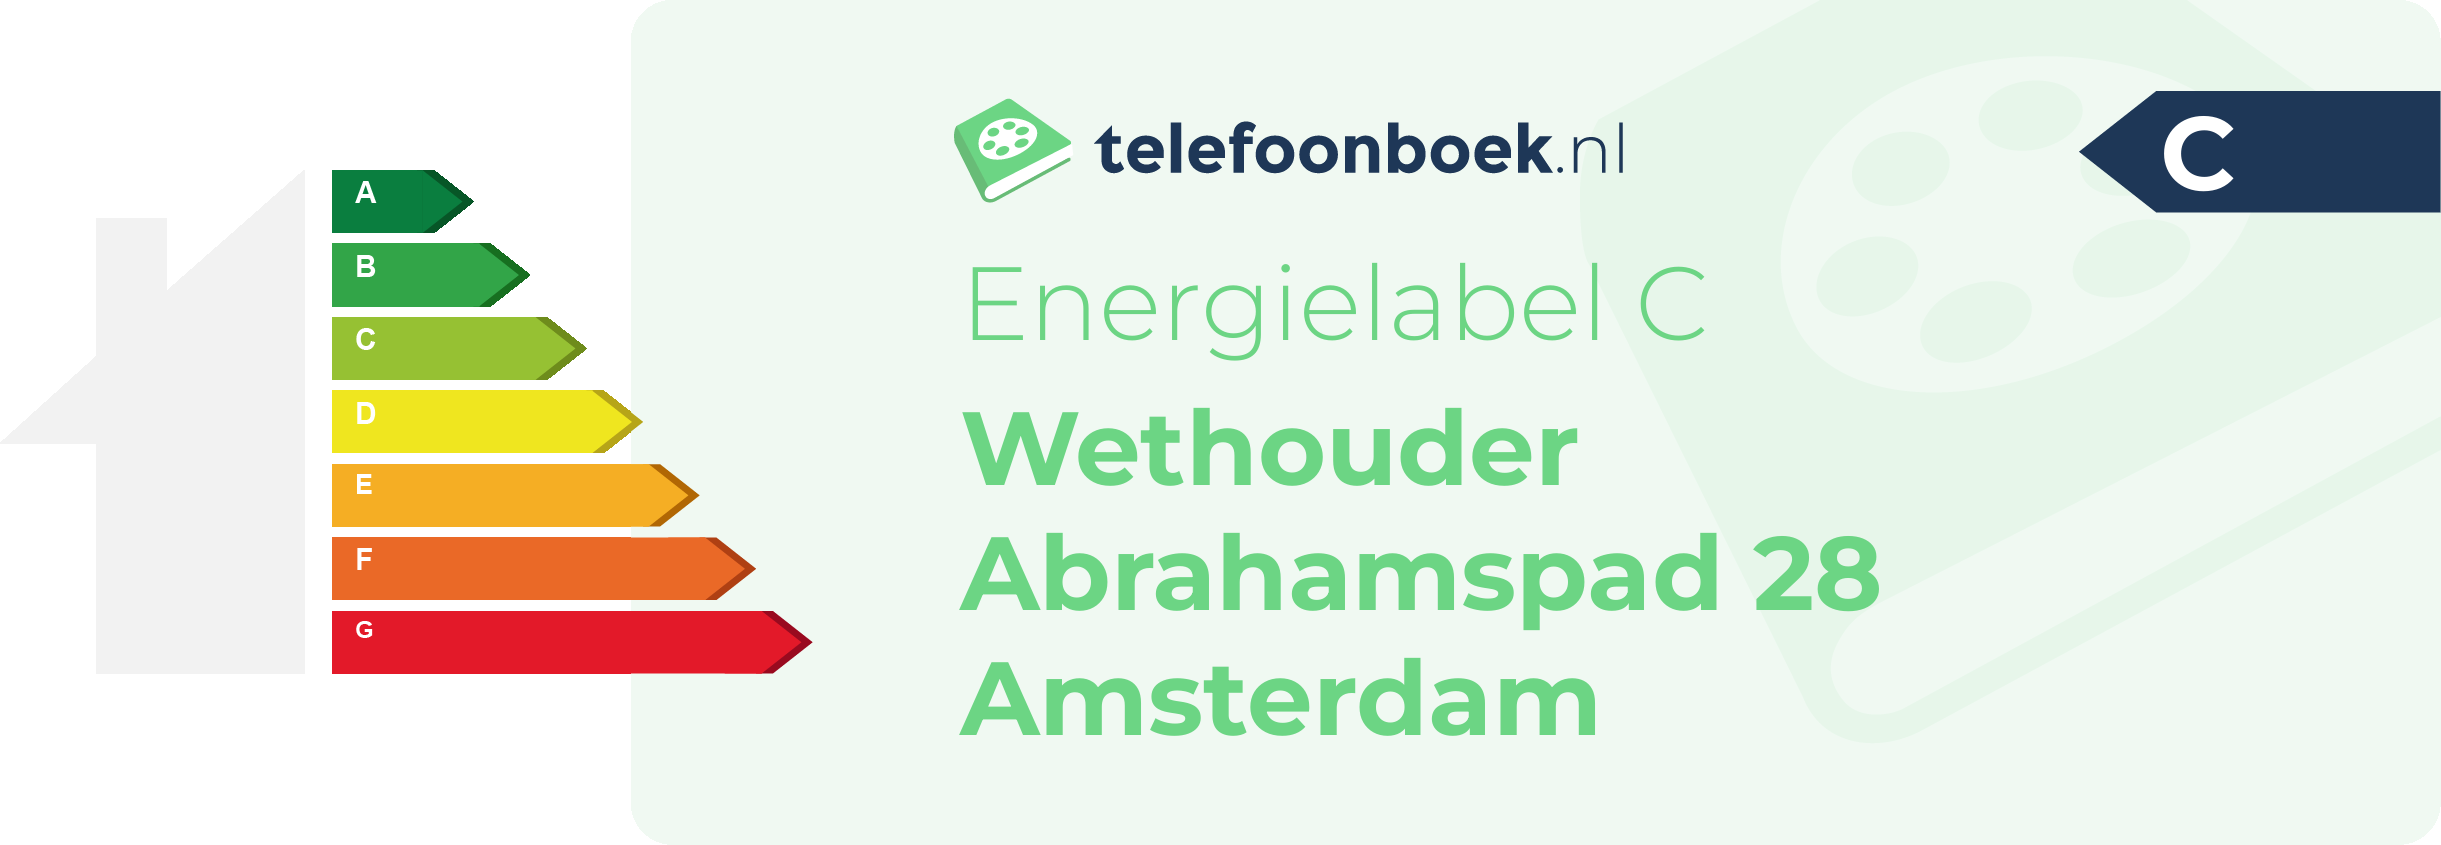 Energielabel Wethouder Abrahamspad 28 Amsterdam